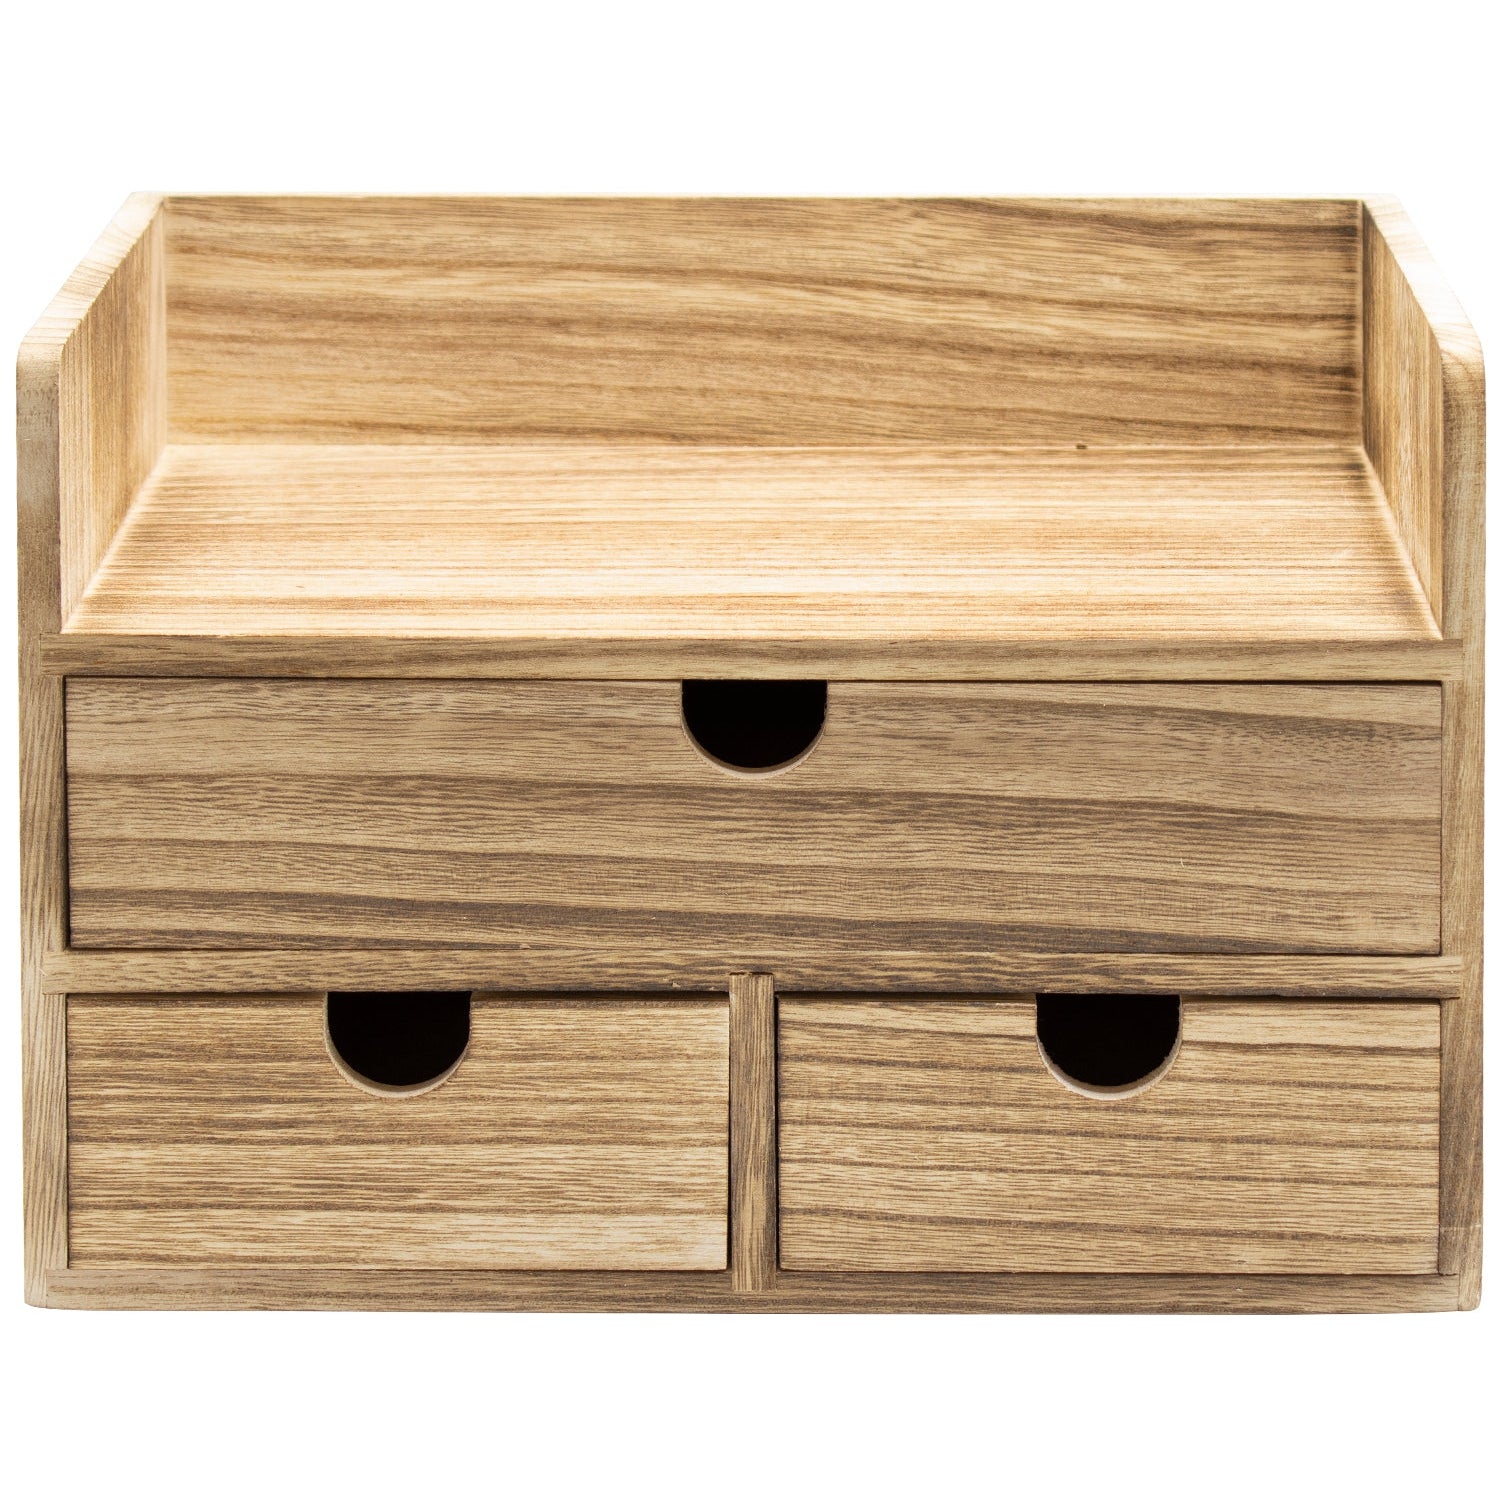 Sorbus wooden desktop cabinet for office, dorm and more